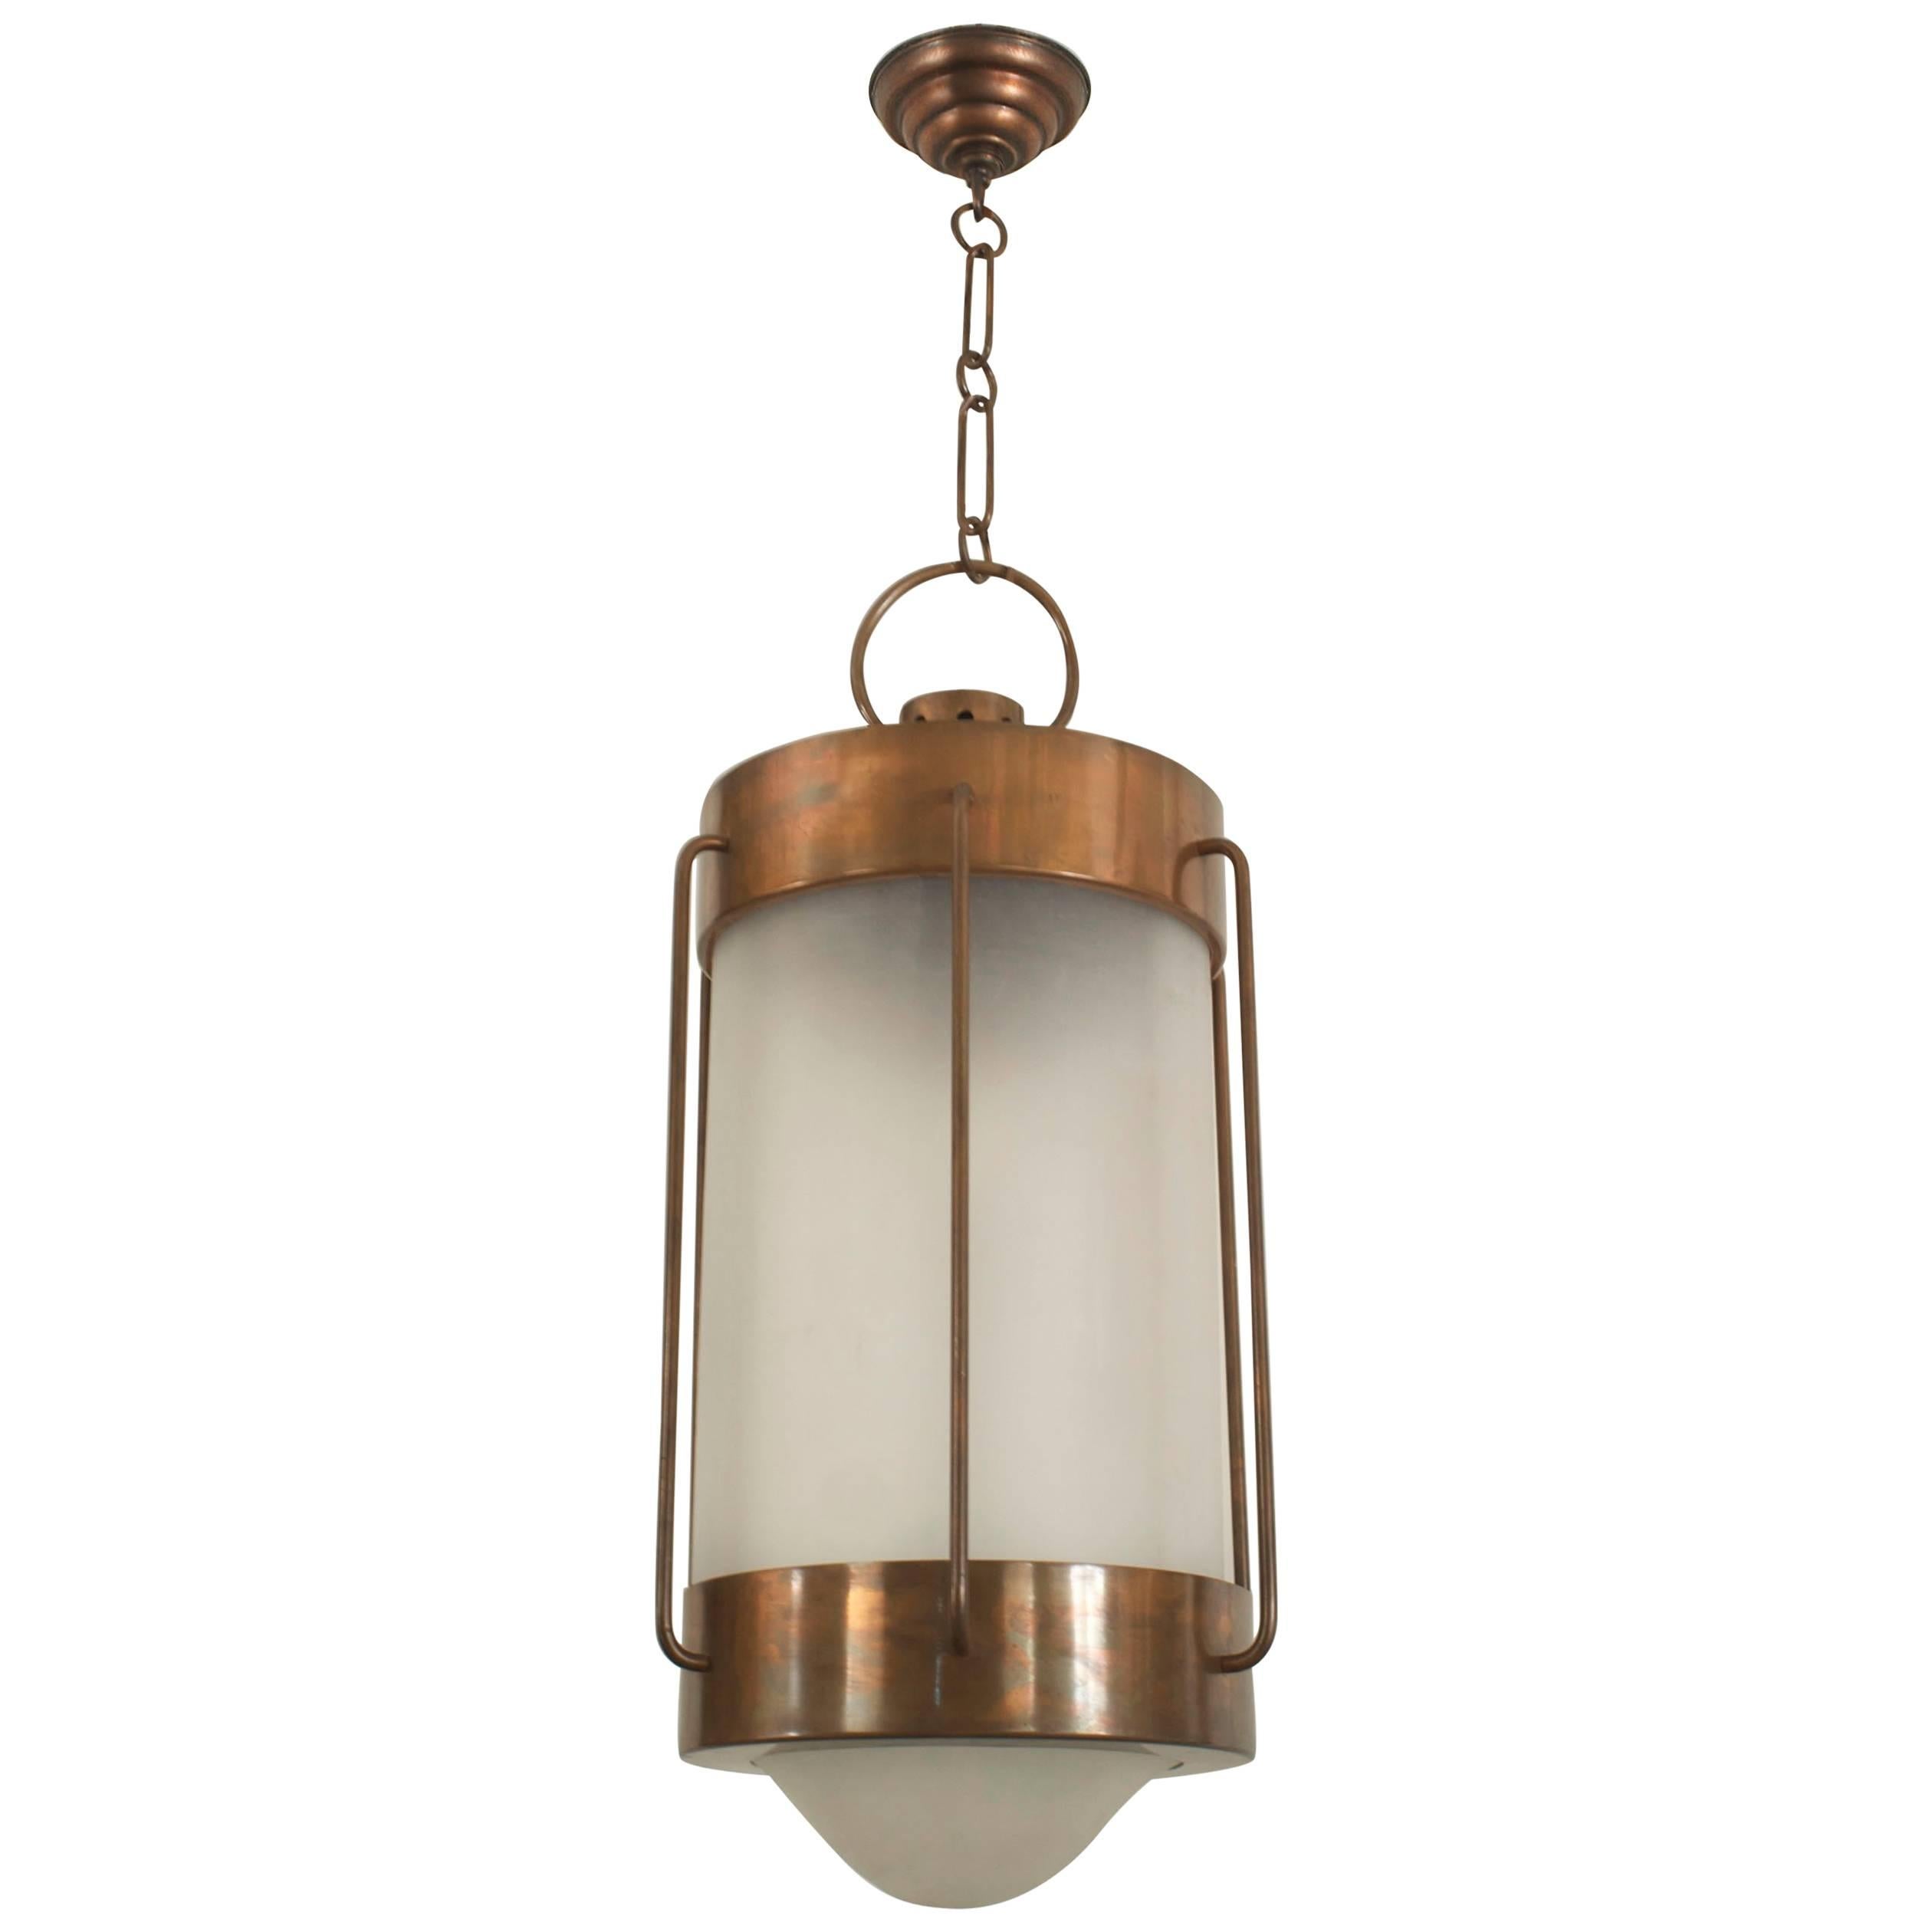 French Art Deco Oxidized Copper Hanging Lantern